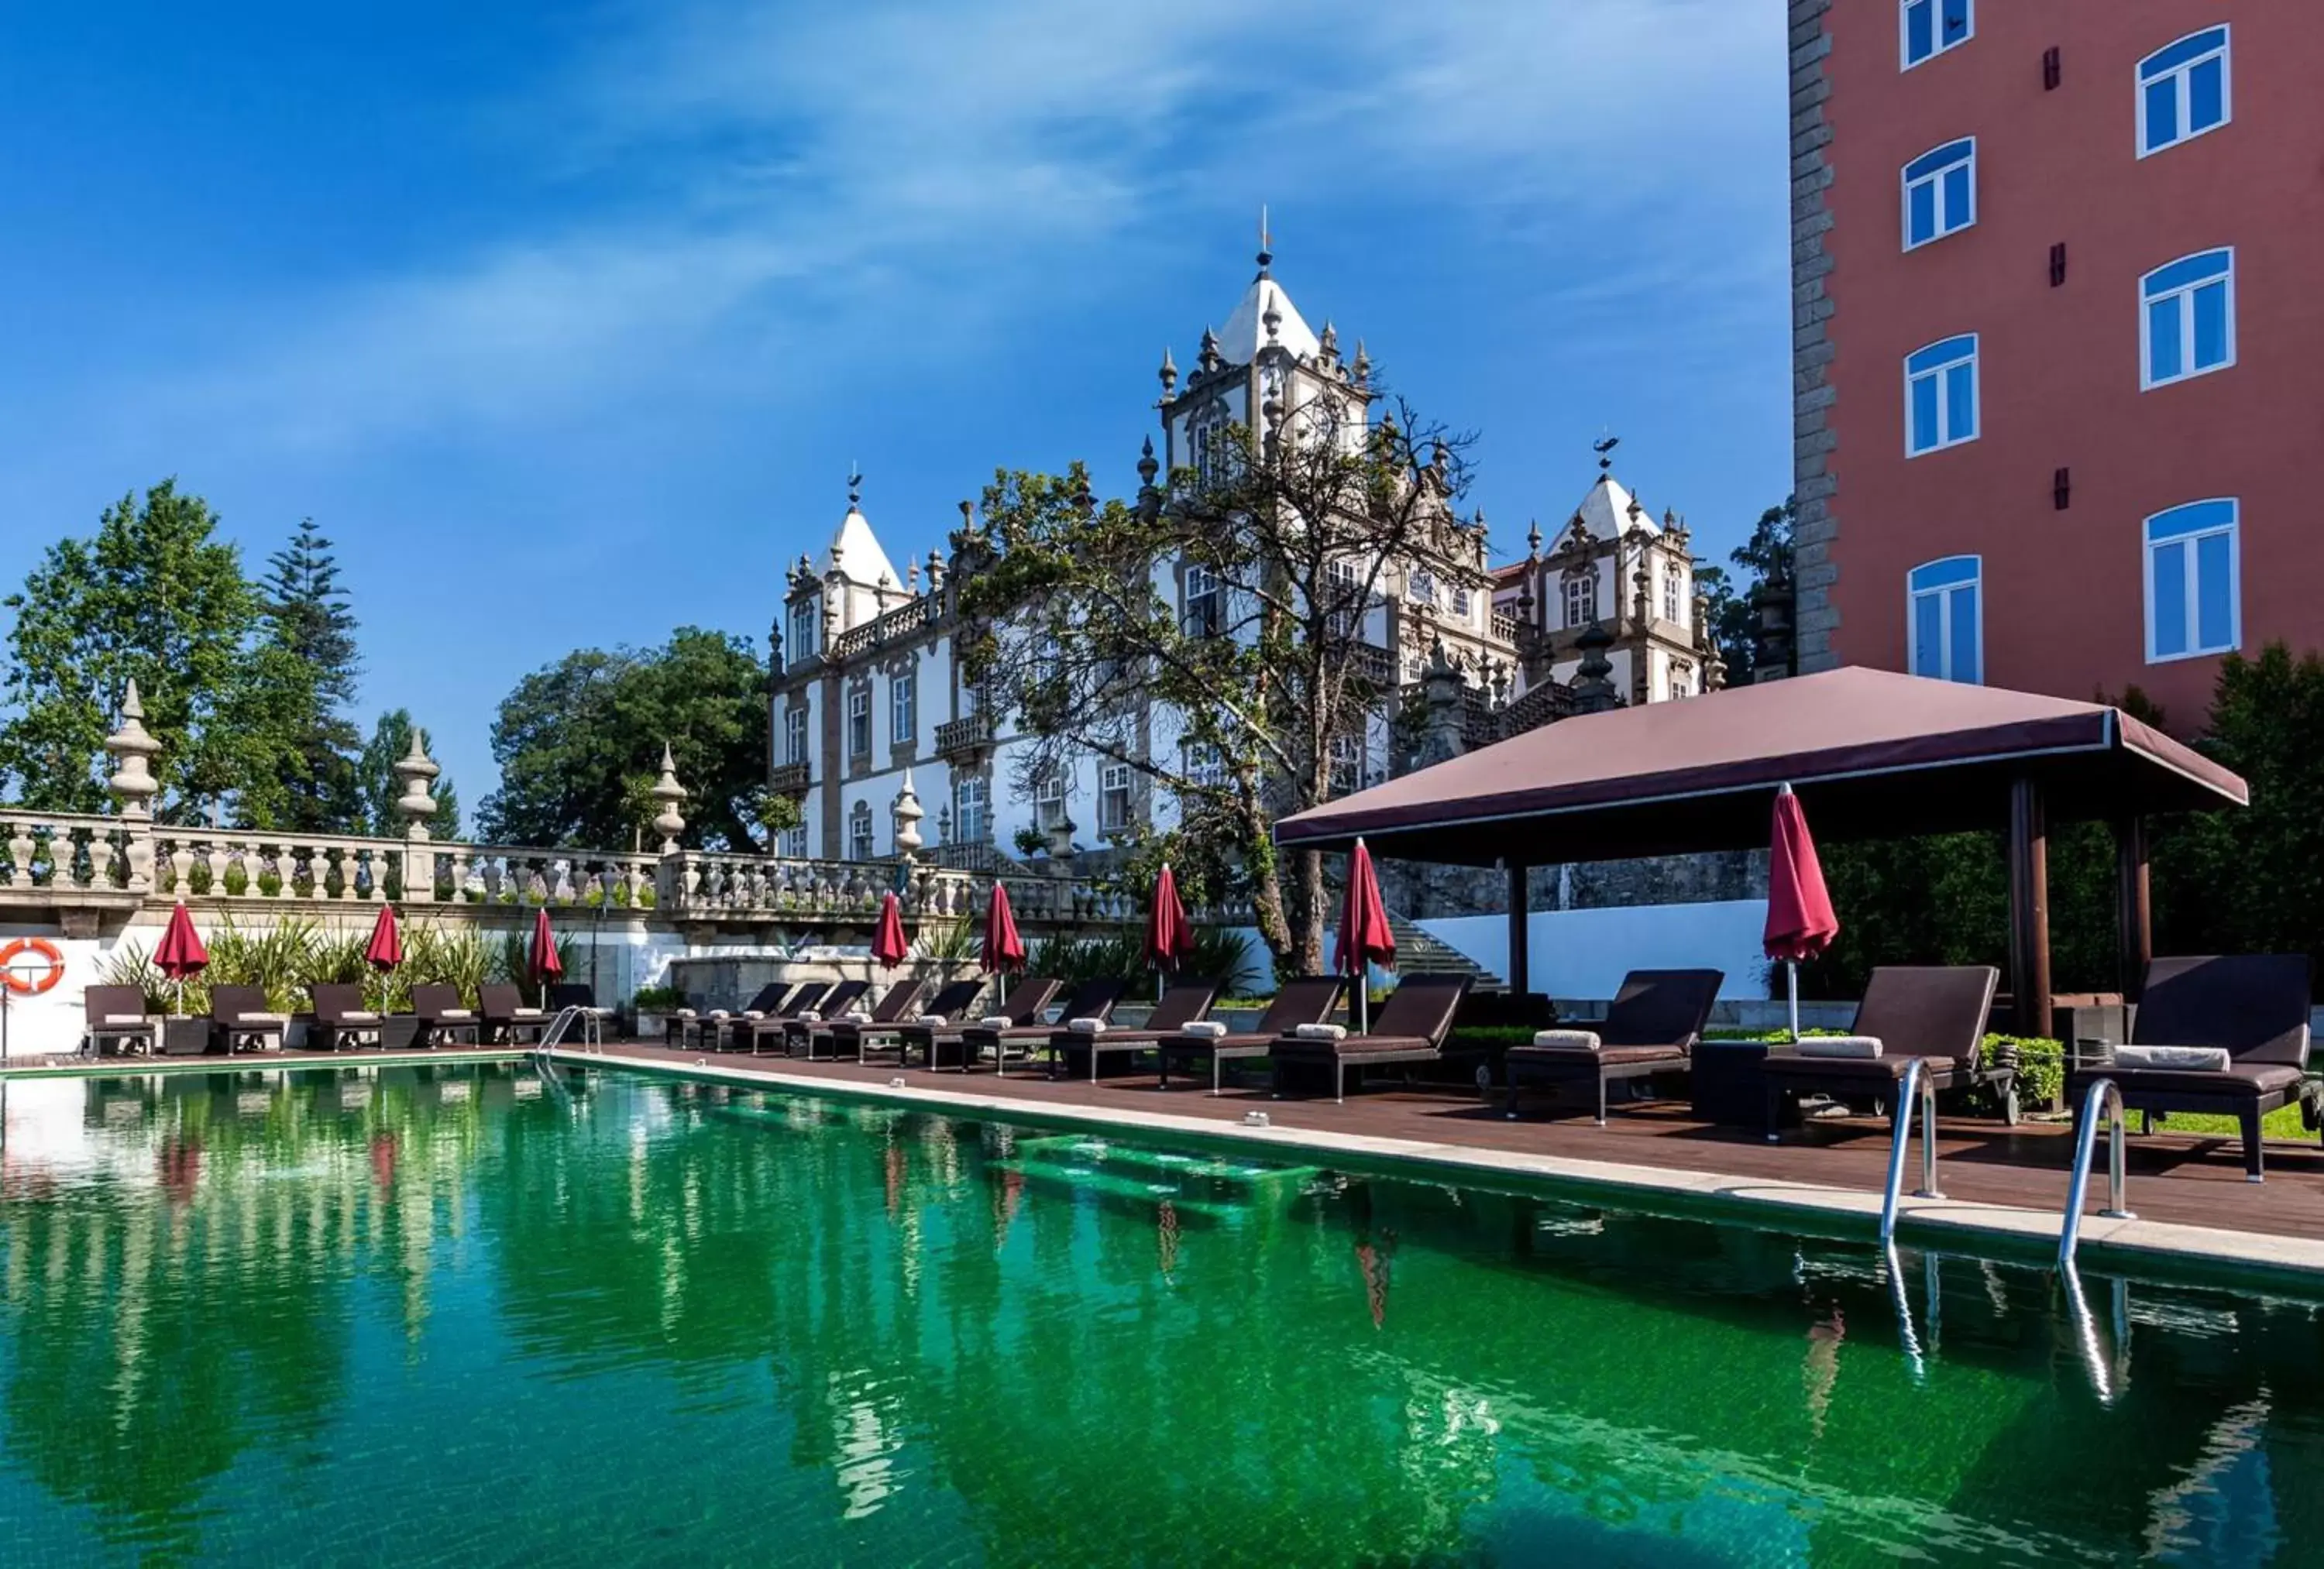 Swimming Pool in Pestana Palacio do Freixo, Pousada & National Monument - The Leading Hotels of the World